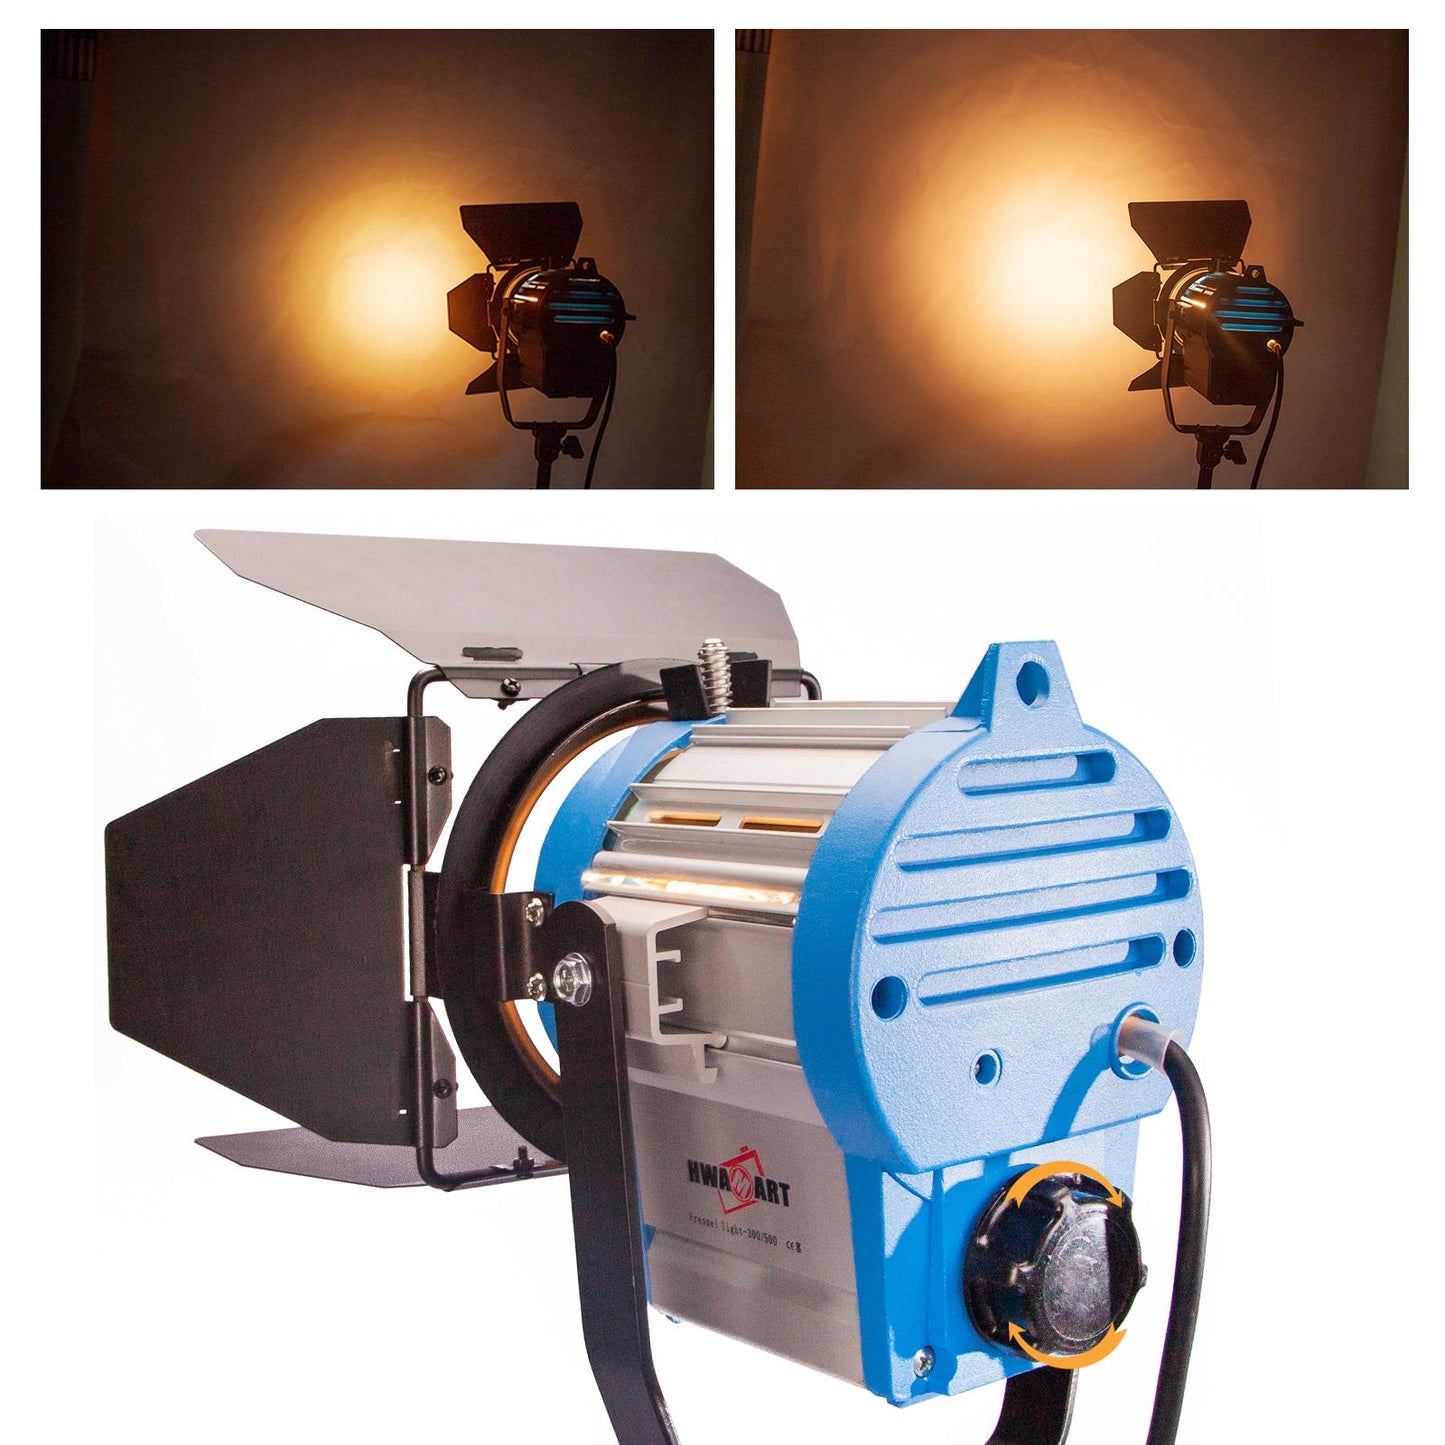 300/500W Studio Fresnel Spotlight, Dimmable, Including 500W Bulb, GY9.5